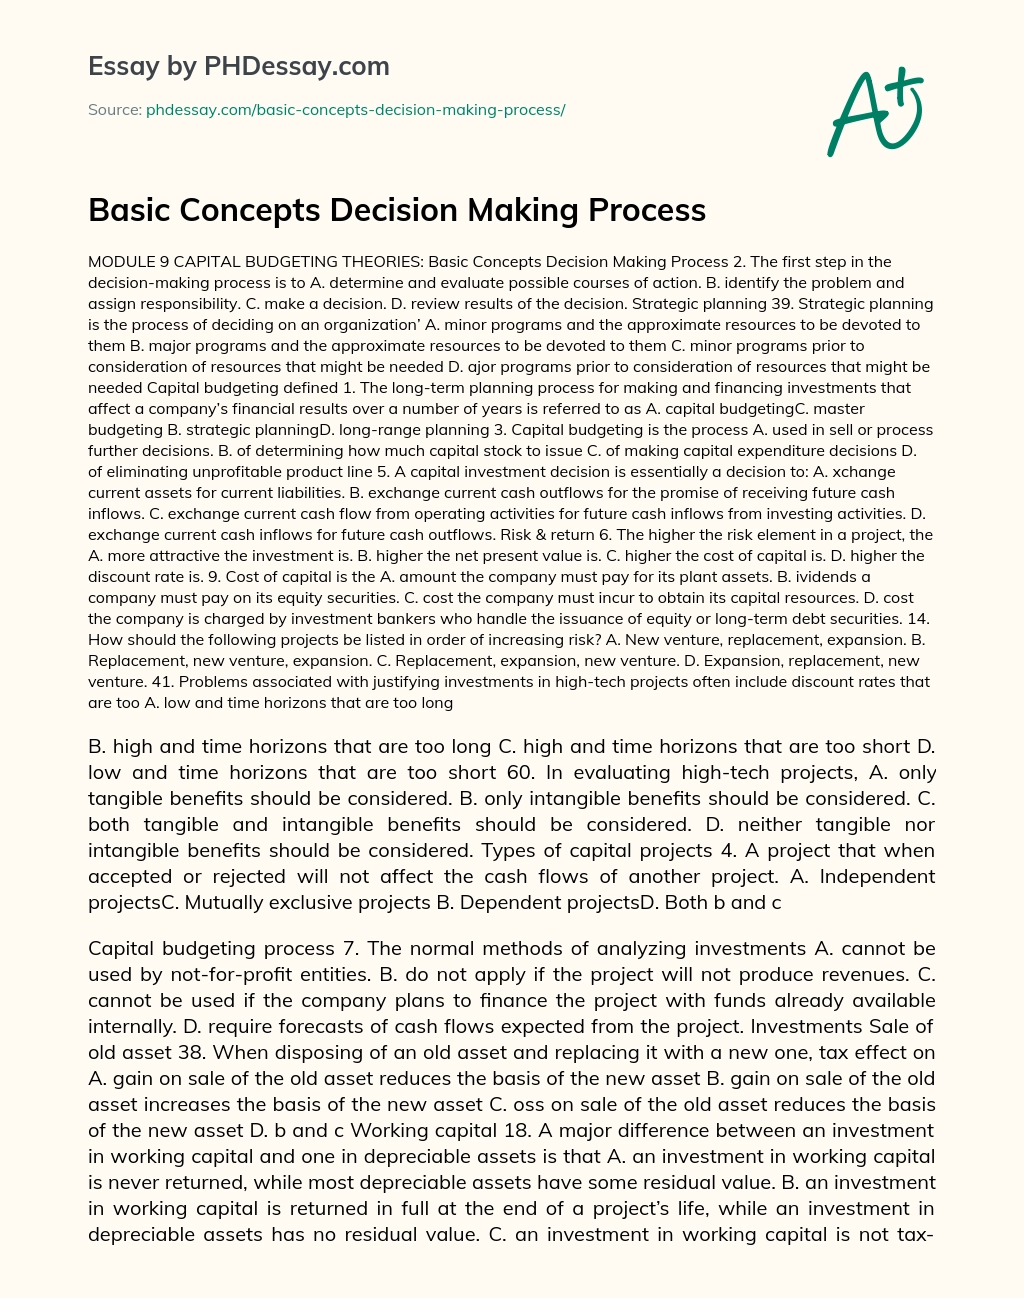 Basic Concepts Decision Making Process essay